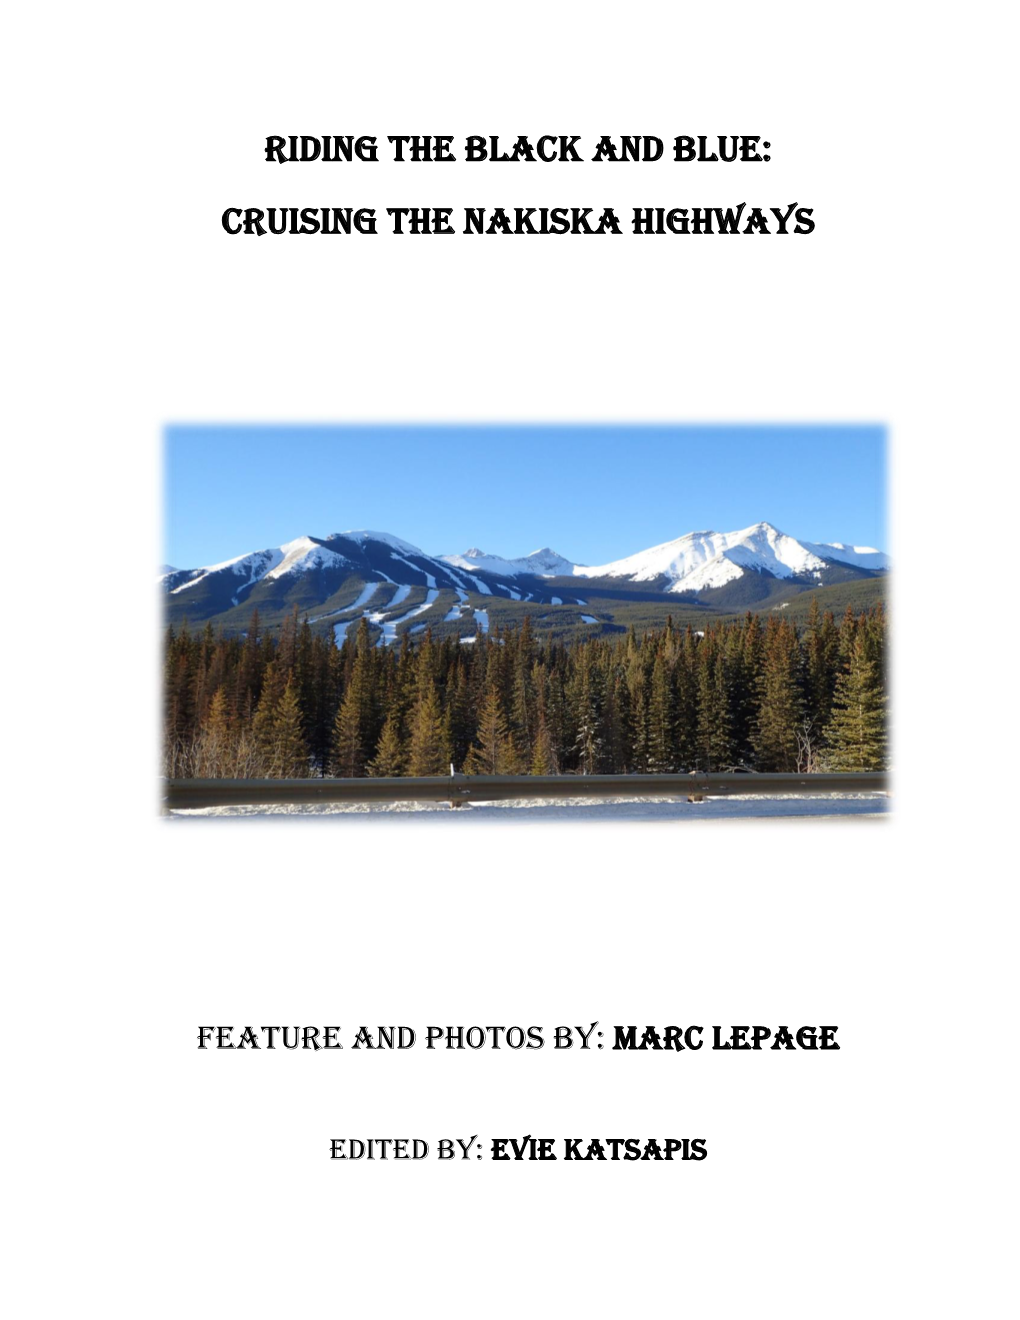 Cruising the Nakiska Highways